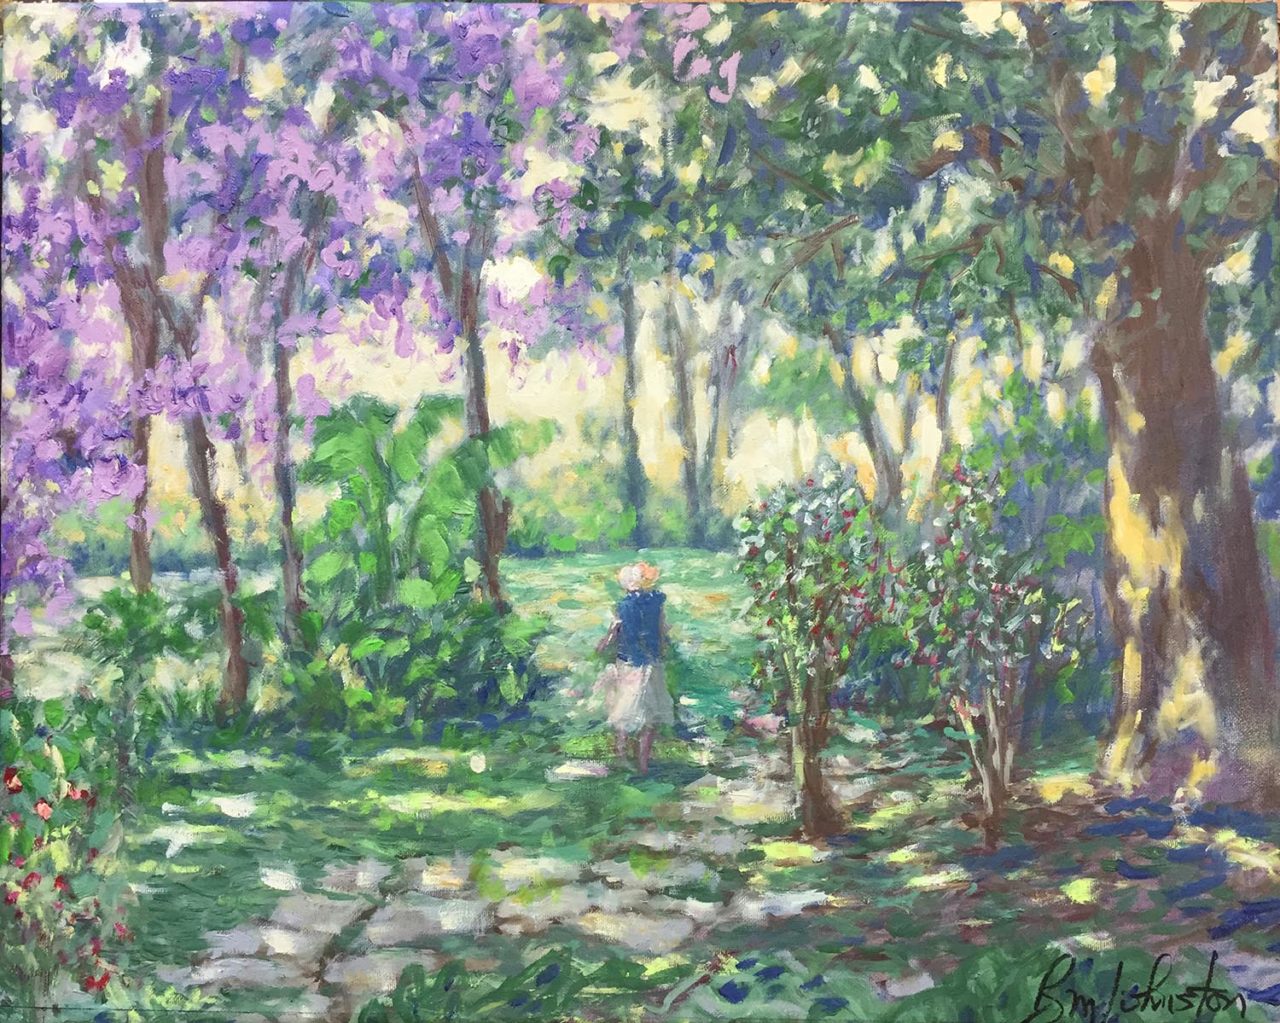 Garden Window - Brian M. Johnston - North American Impressionist Artist - 16" x 20" - oil on canvas